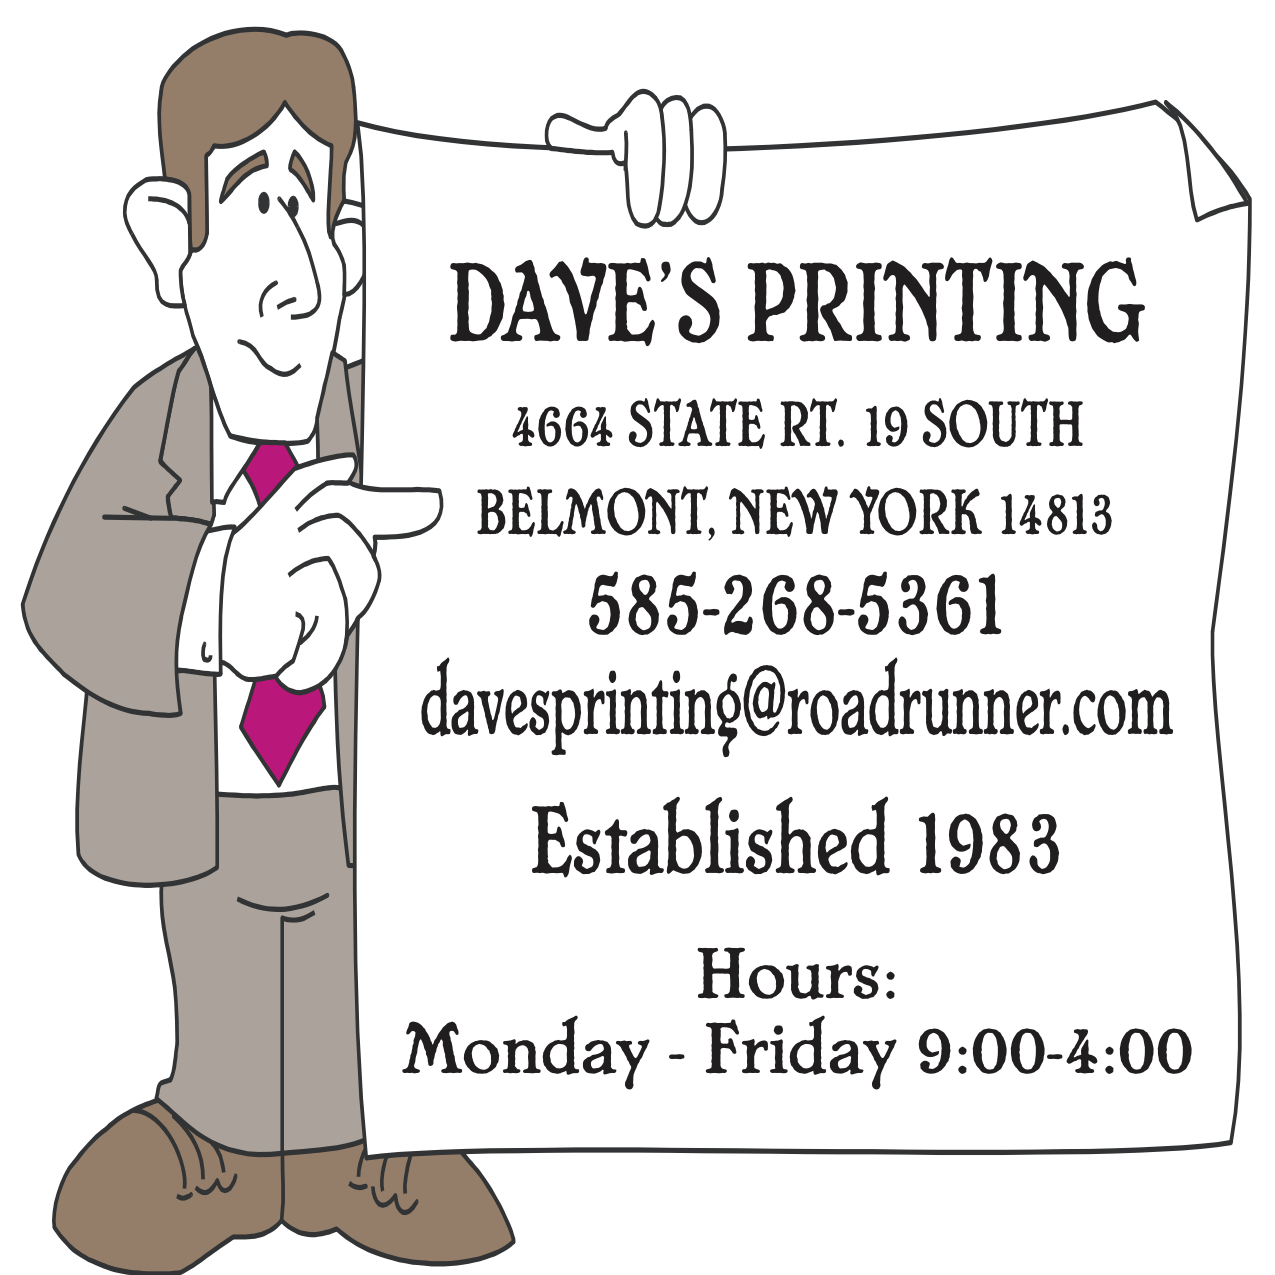 Dave's Printing